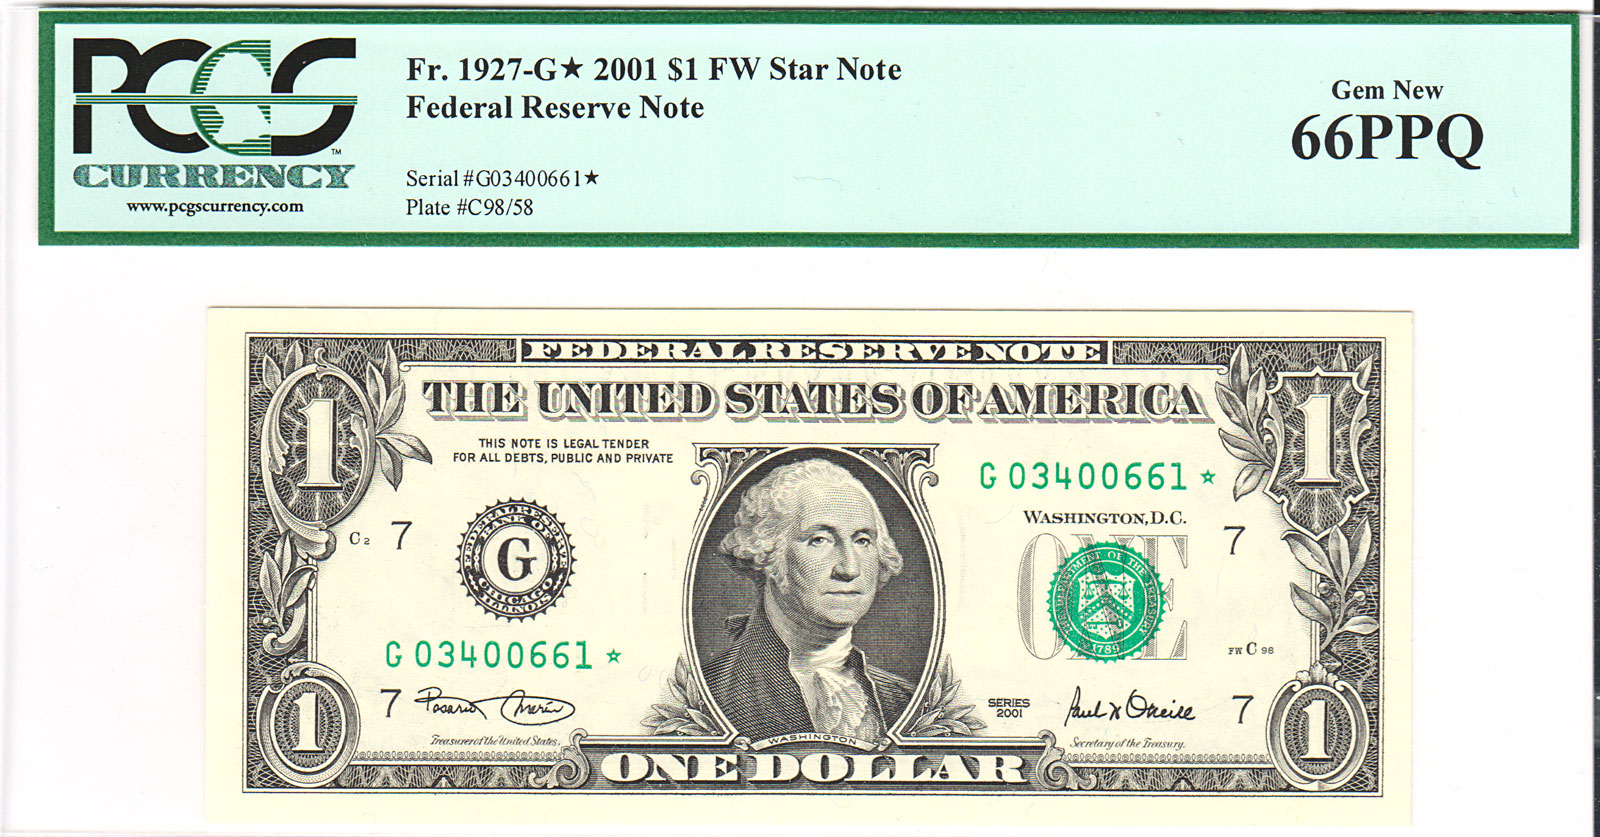 Нужен 1 доллар. 1 Доллар. Один доллар. Новая купюра 1 доллар. Один доллар США банкнота.